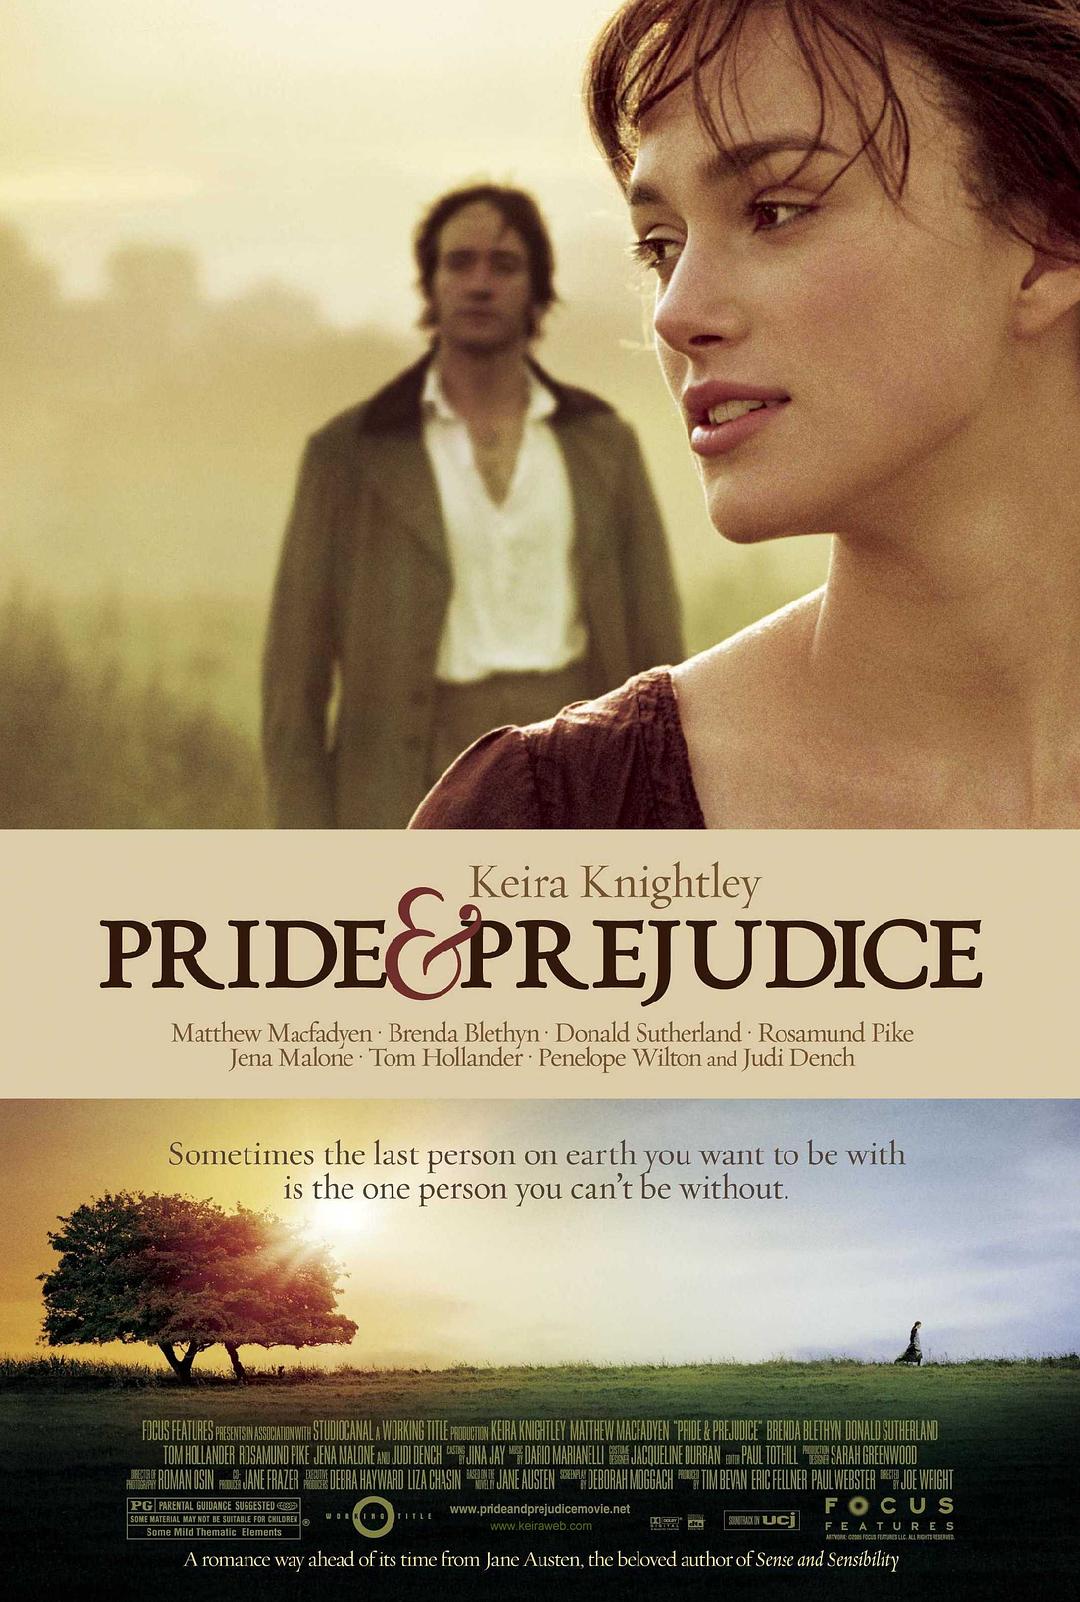 狂妄与偏见 Pride.And.Prejudice.2005.1080p.BluRay.VC-1.DTS-HD.MA.5.1-TRUEDEF 40.59GB-1.jpg